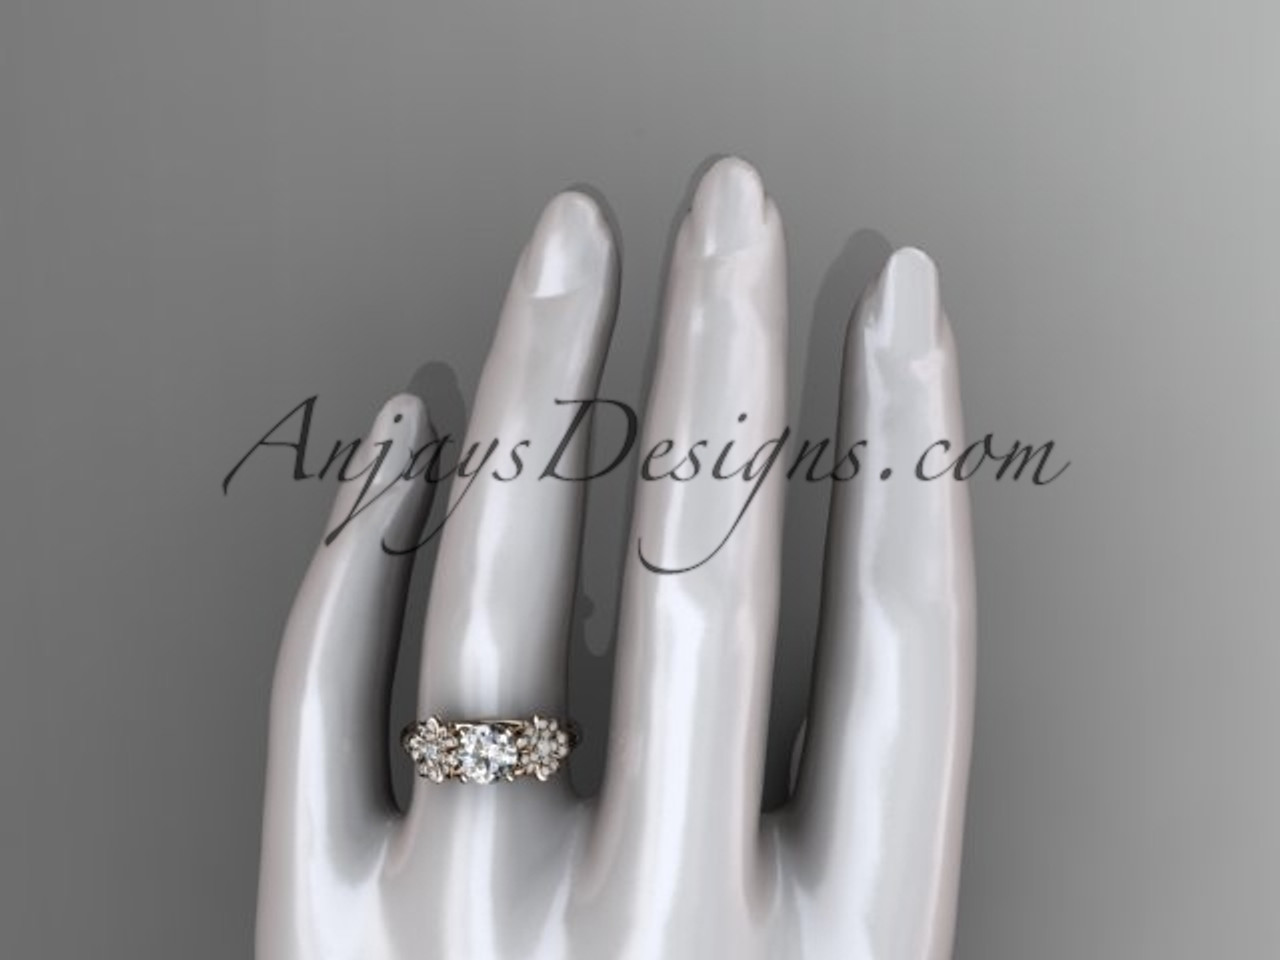 Sakura Blossom Diamond Ring, Rose Gold Floral Wedding Ring